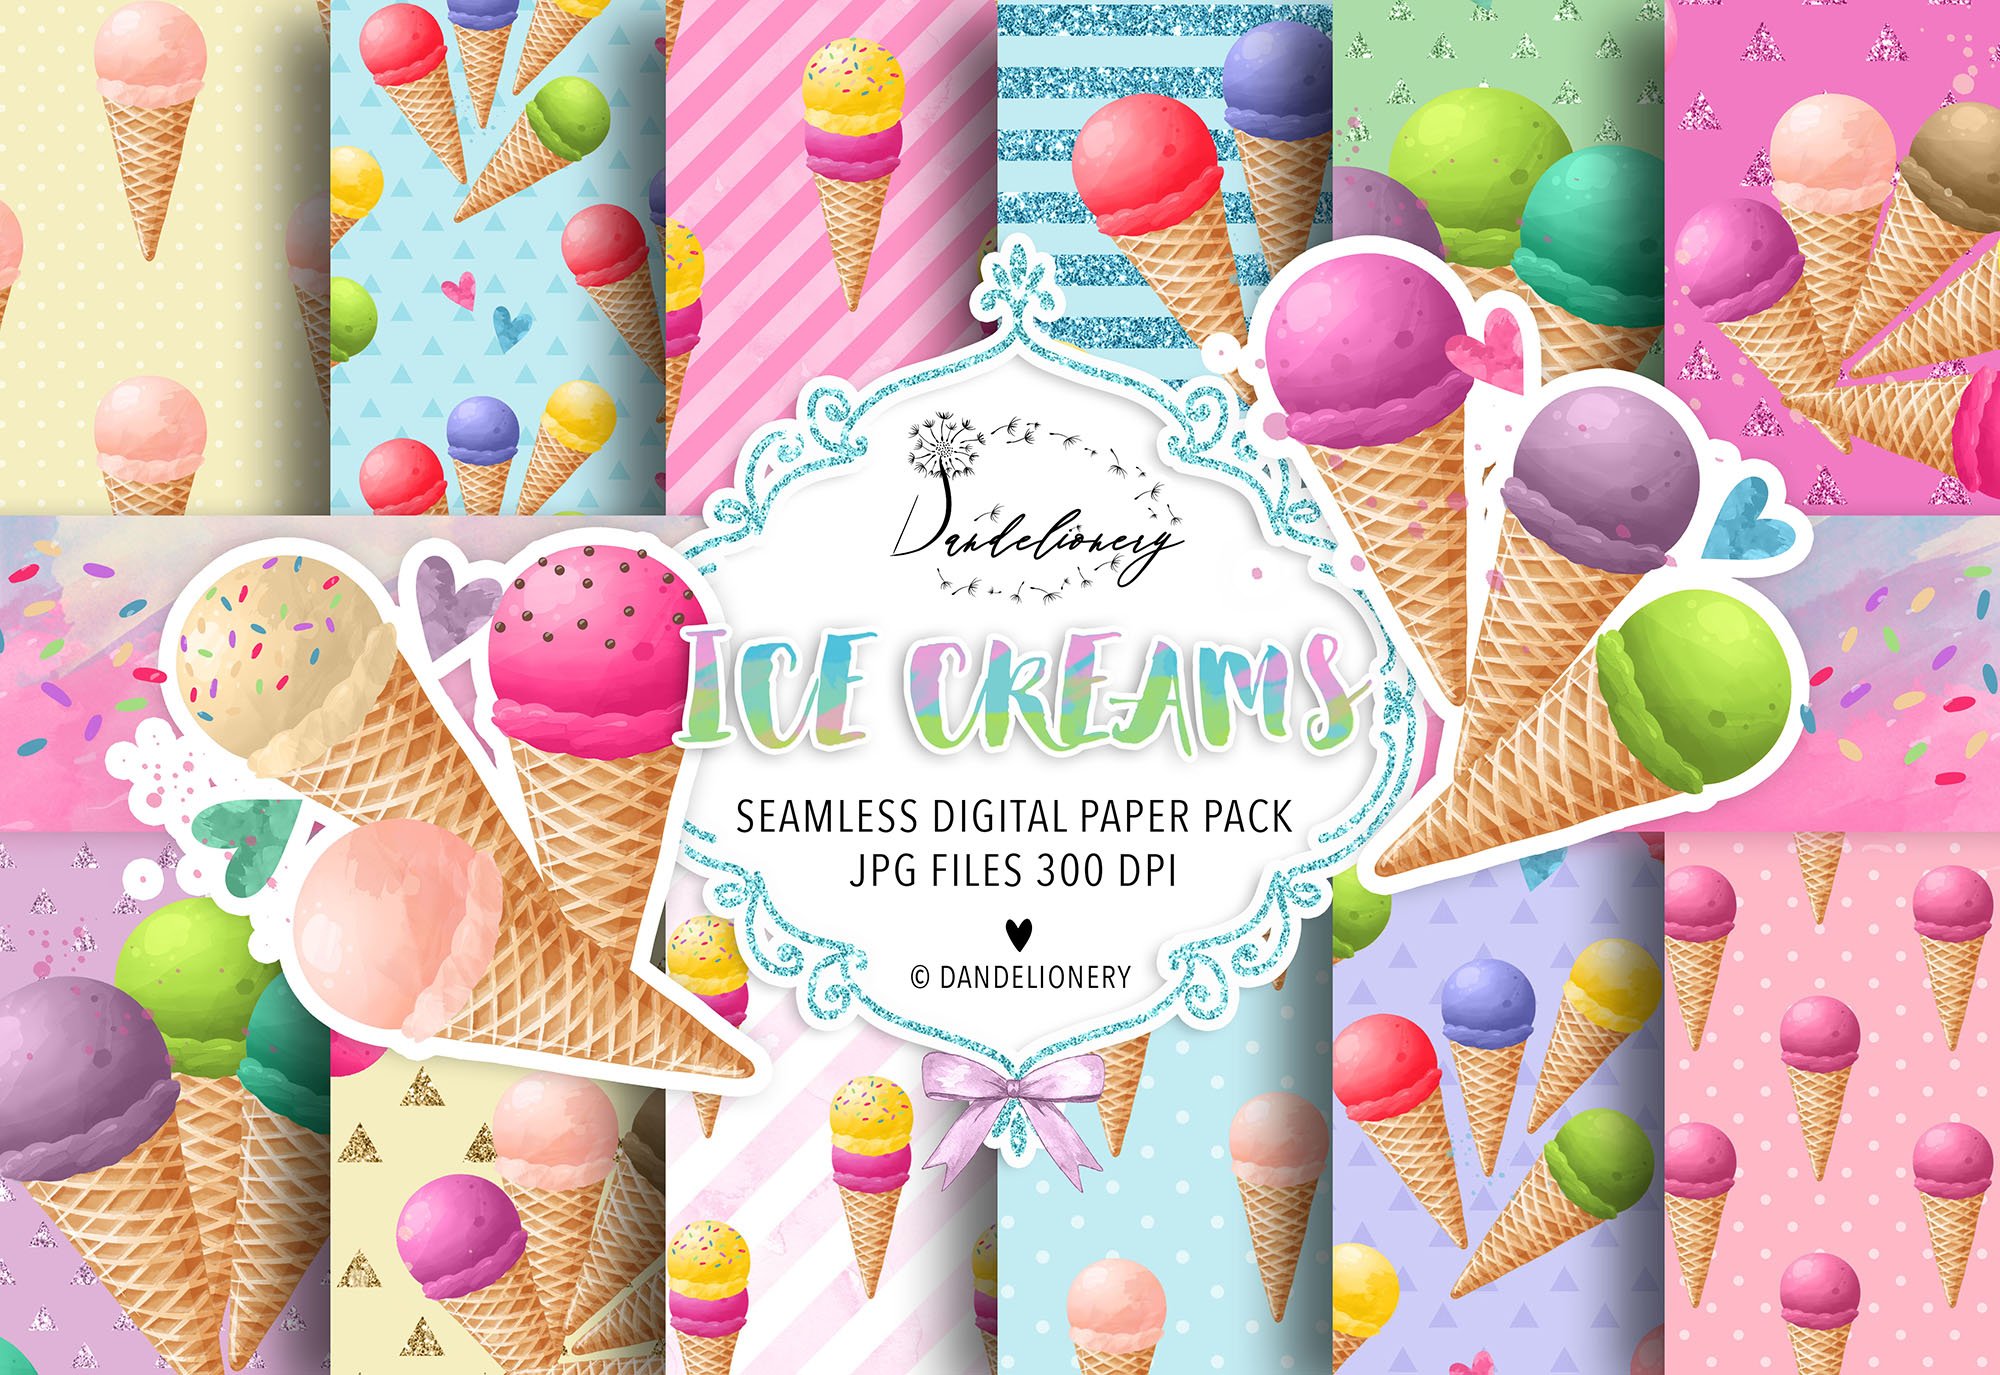 Ice Cream digital paper pack cover image.